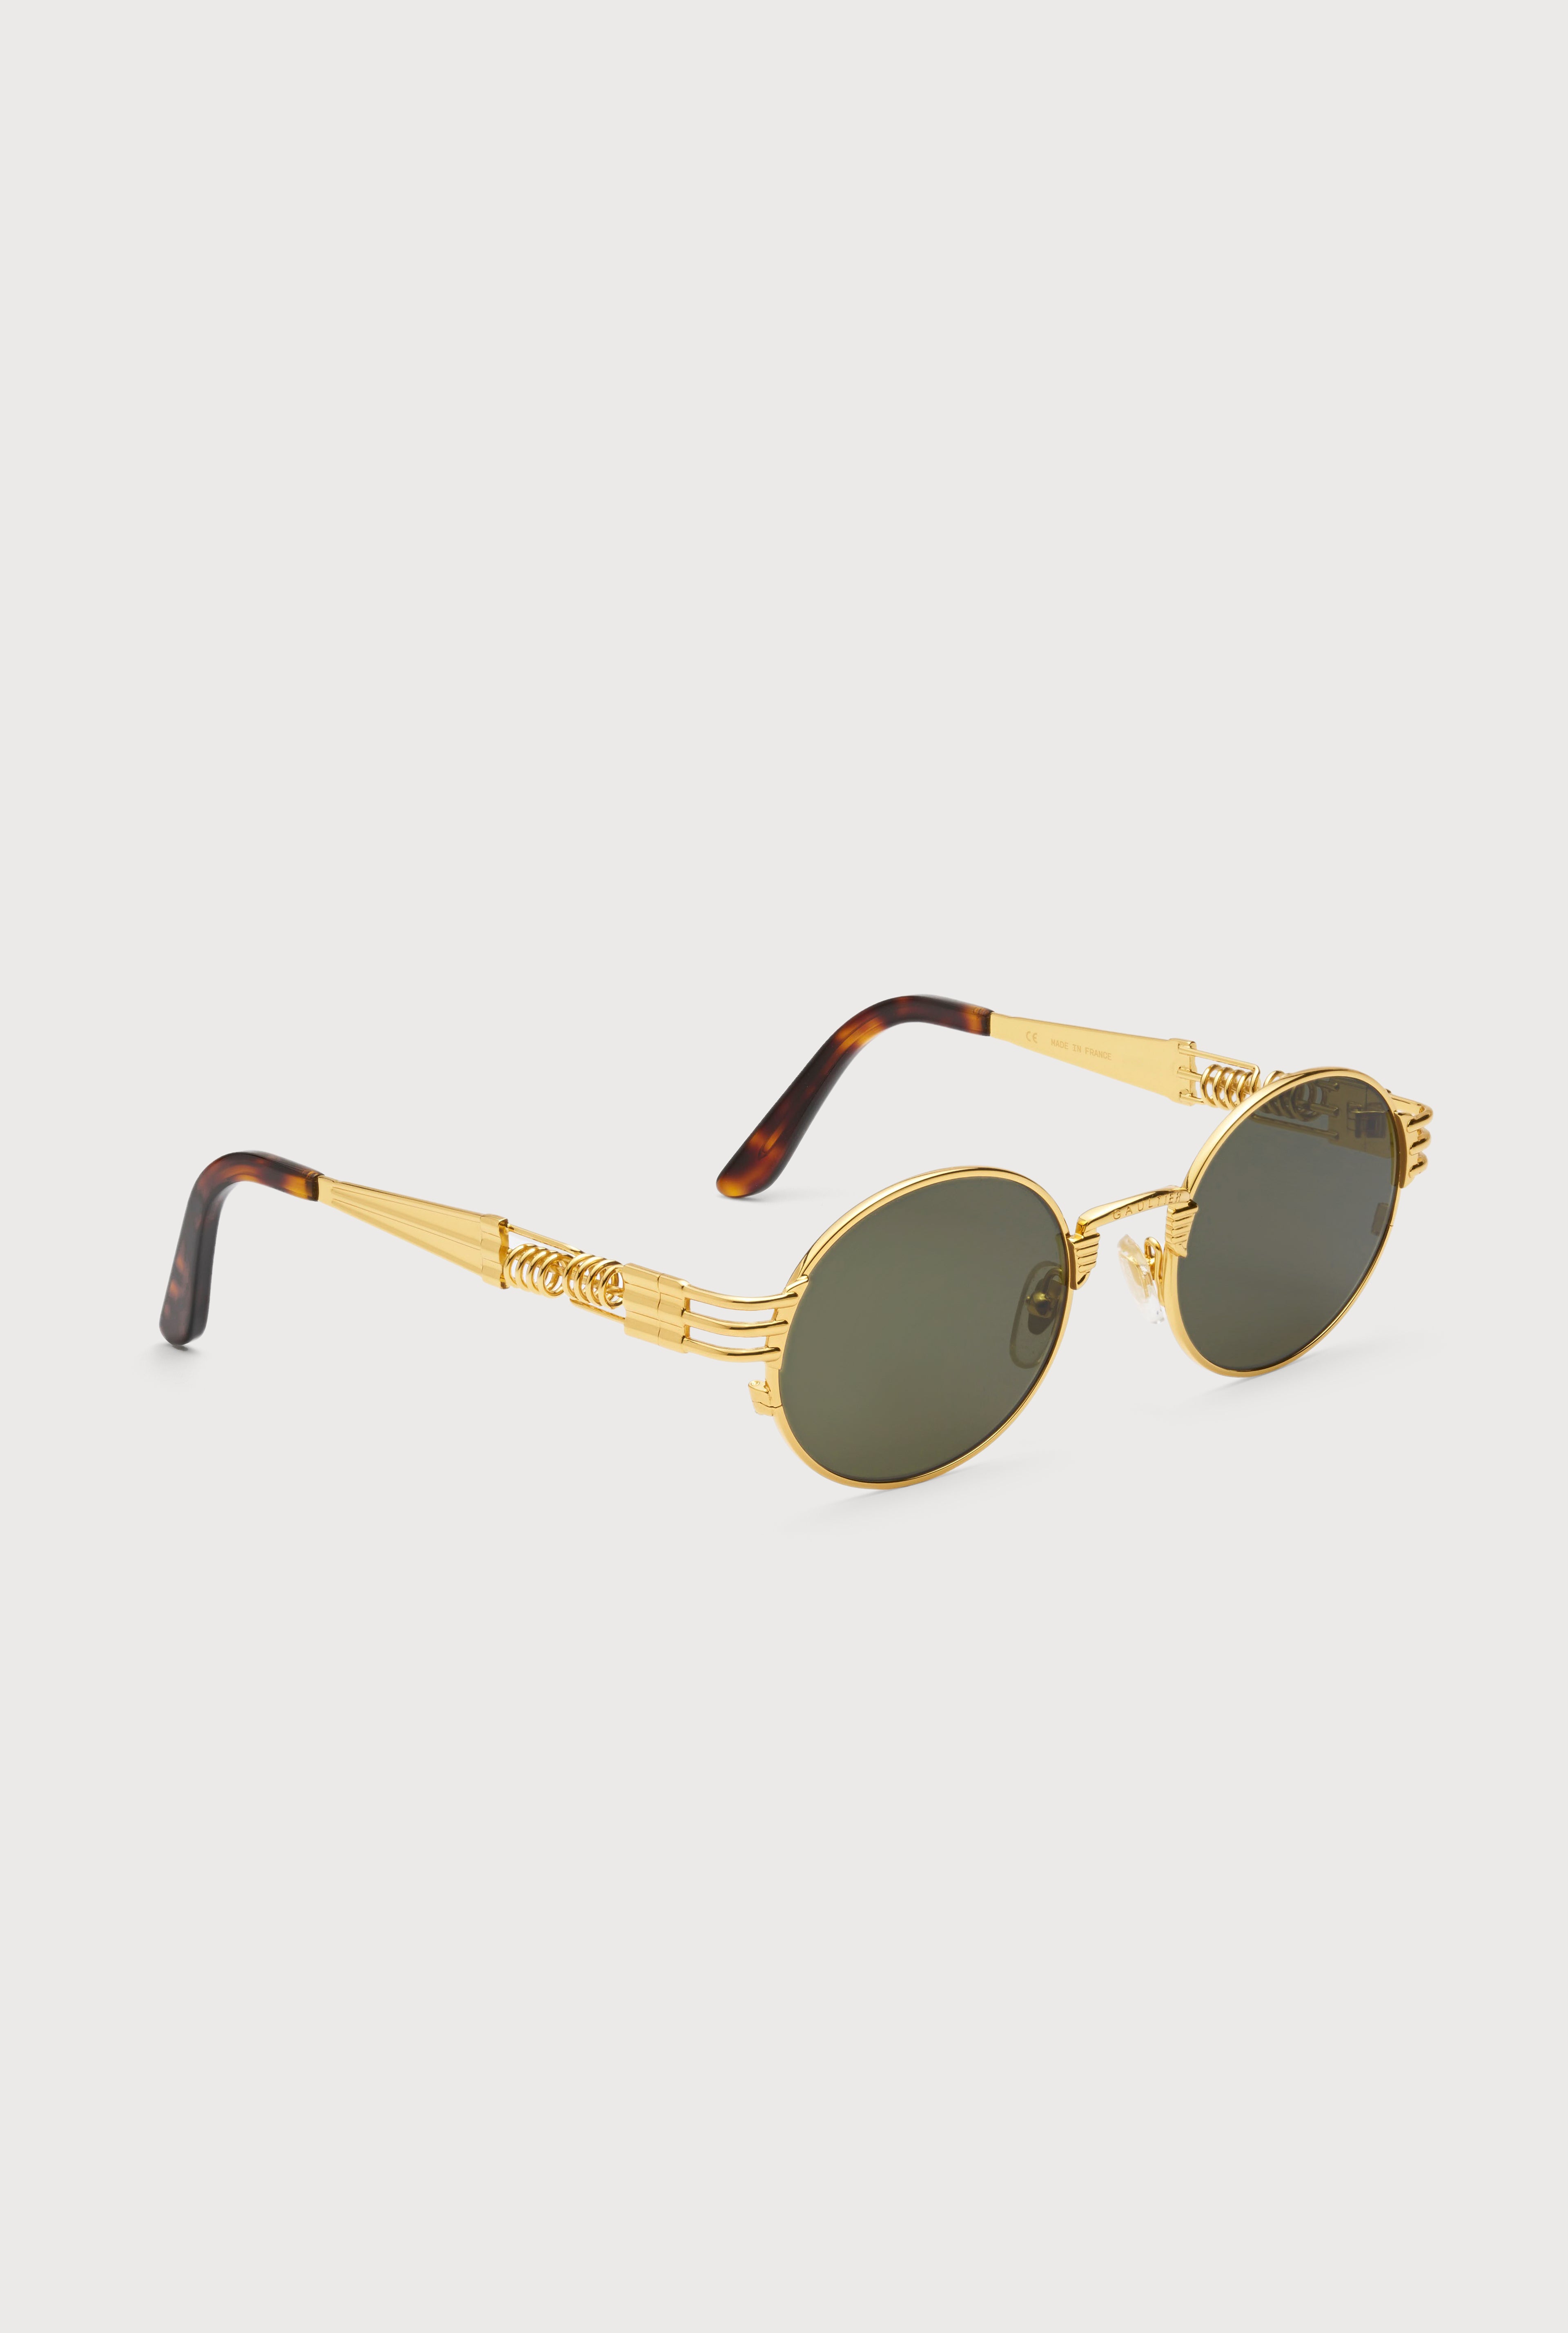 The Gold 56-6106 Sunglasses